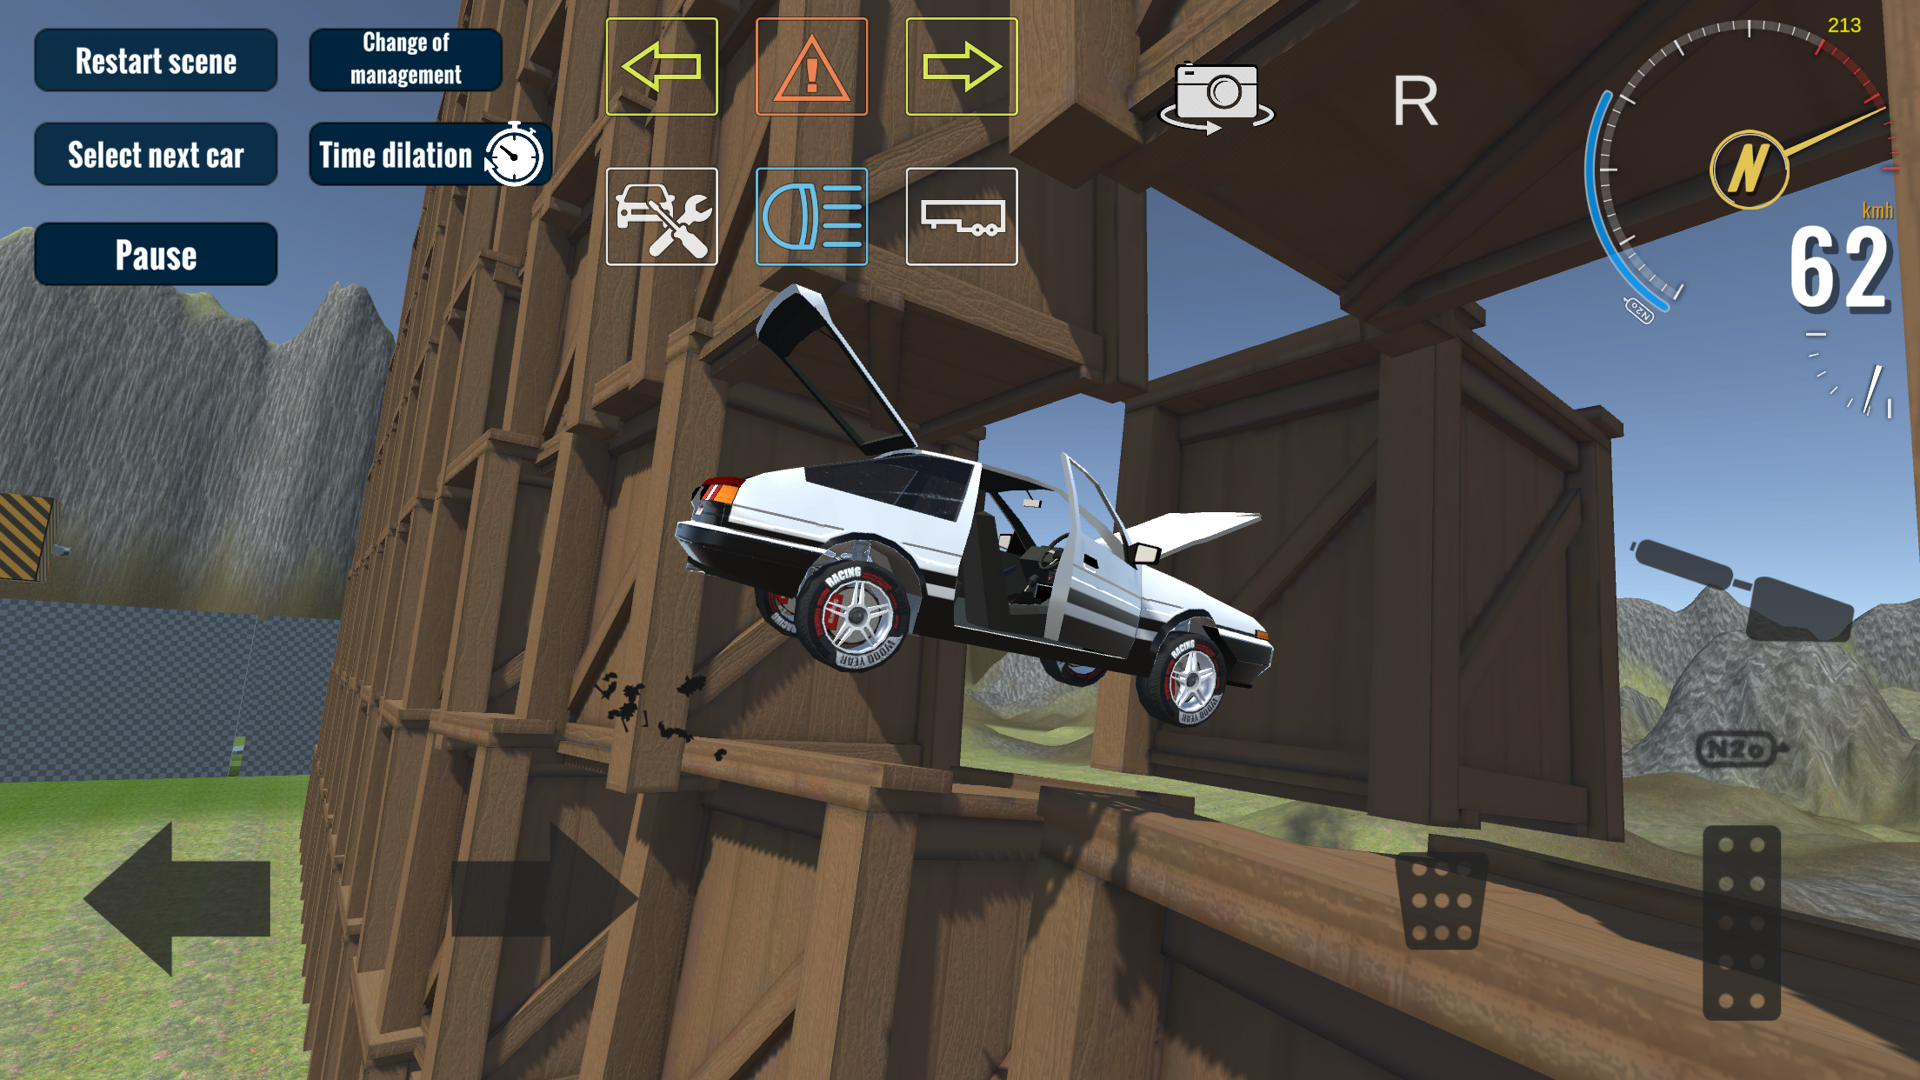 Car Crash Test Simulator 3D Game Screenshot